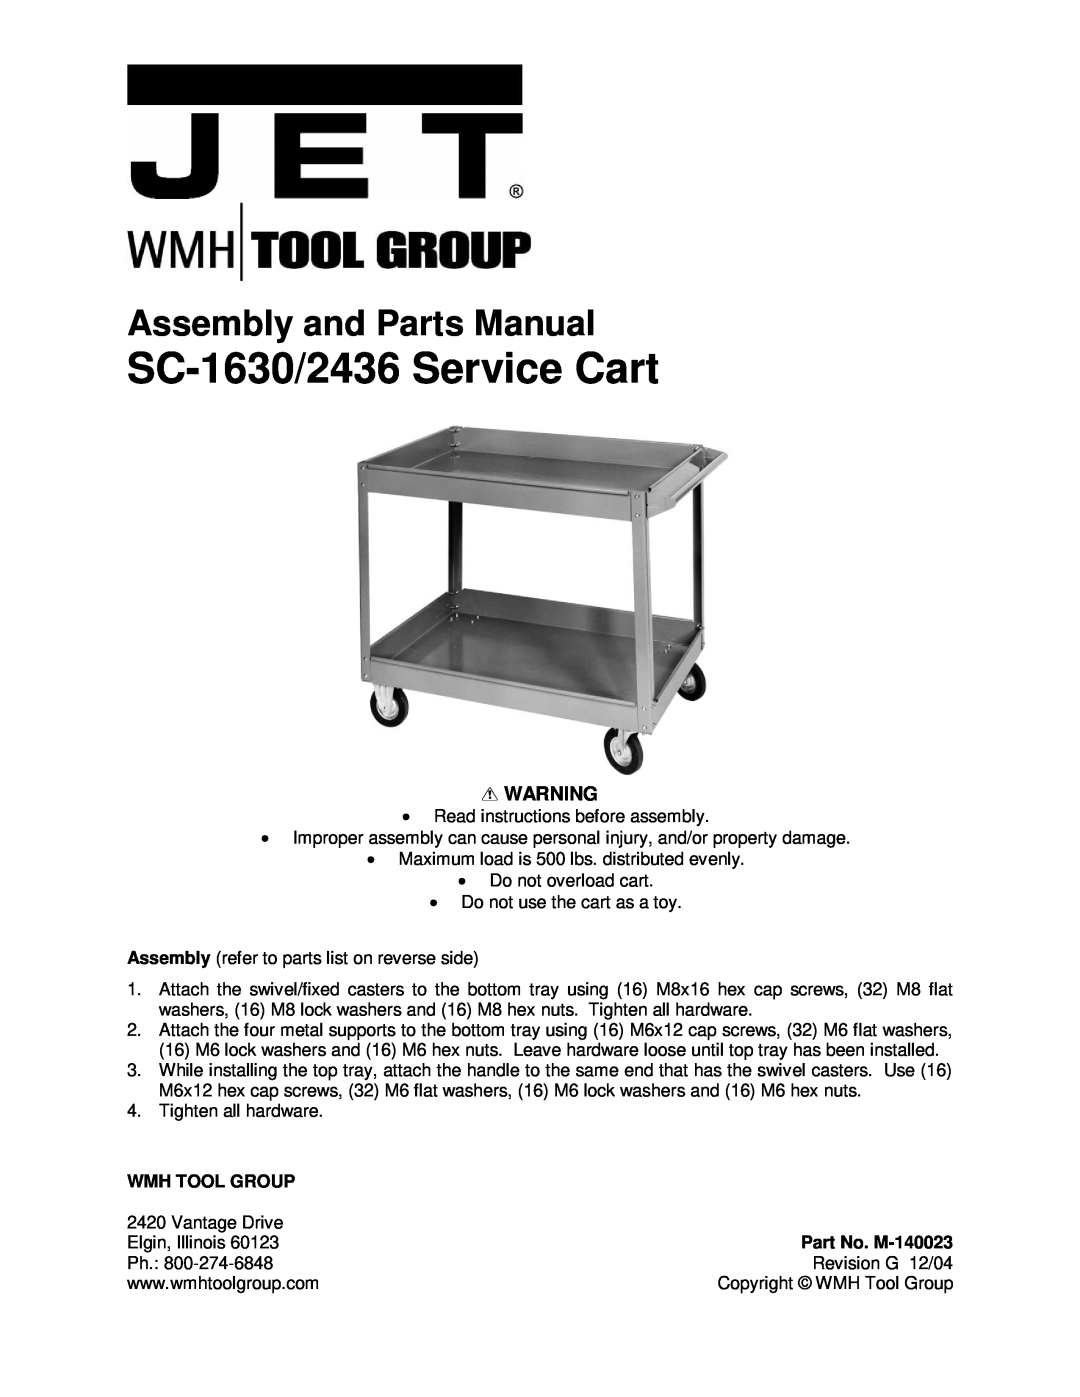 Jet Tools SC-1630, SC-2436 manual Part No. M-140023, SC-1630/2436Service Cart, Assembly and Parts Manual 